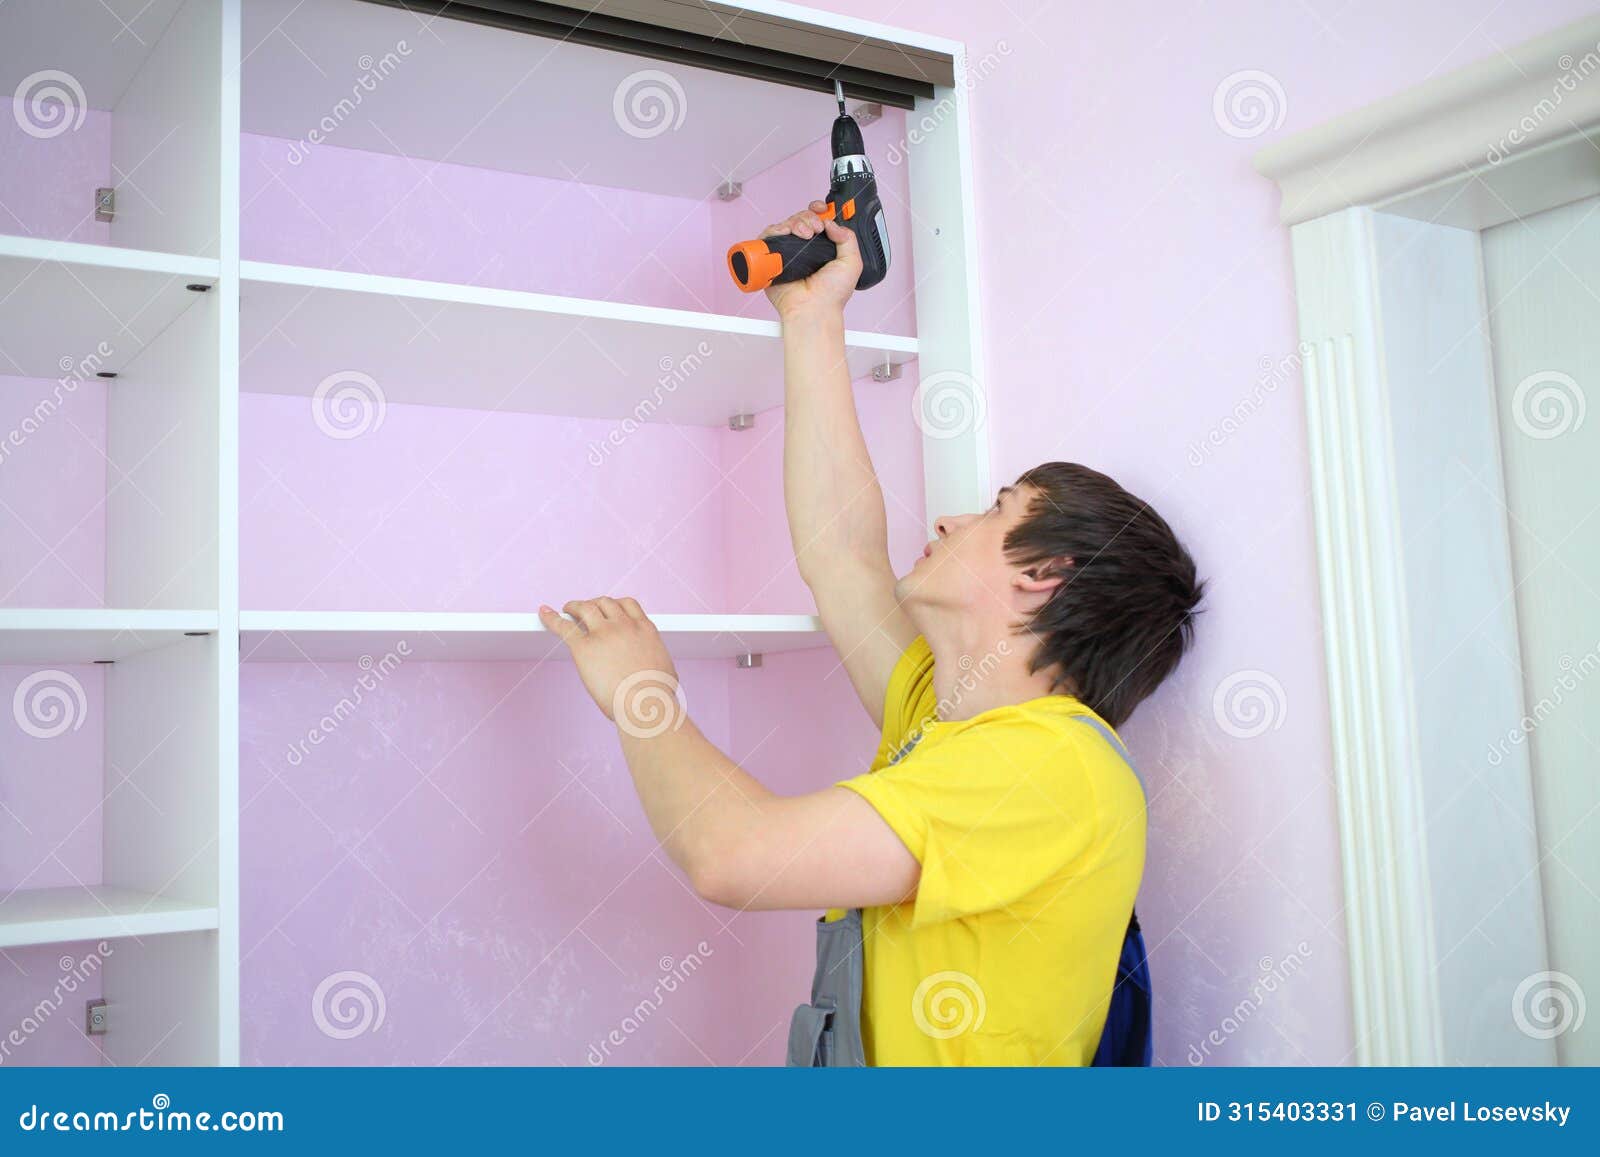 man installing guide rails for sliding wardrobe in